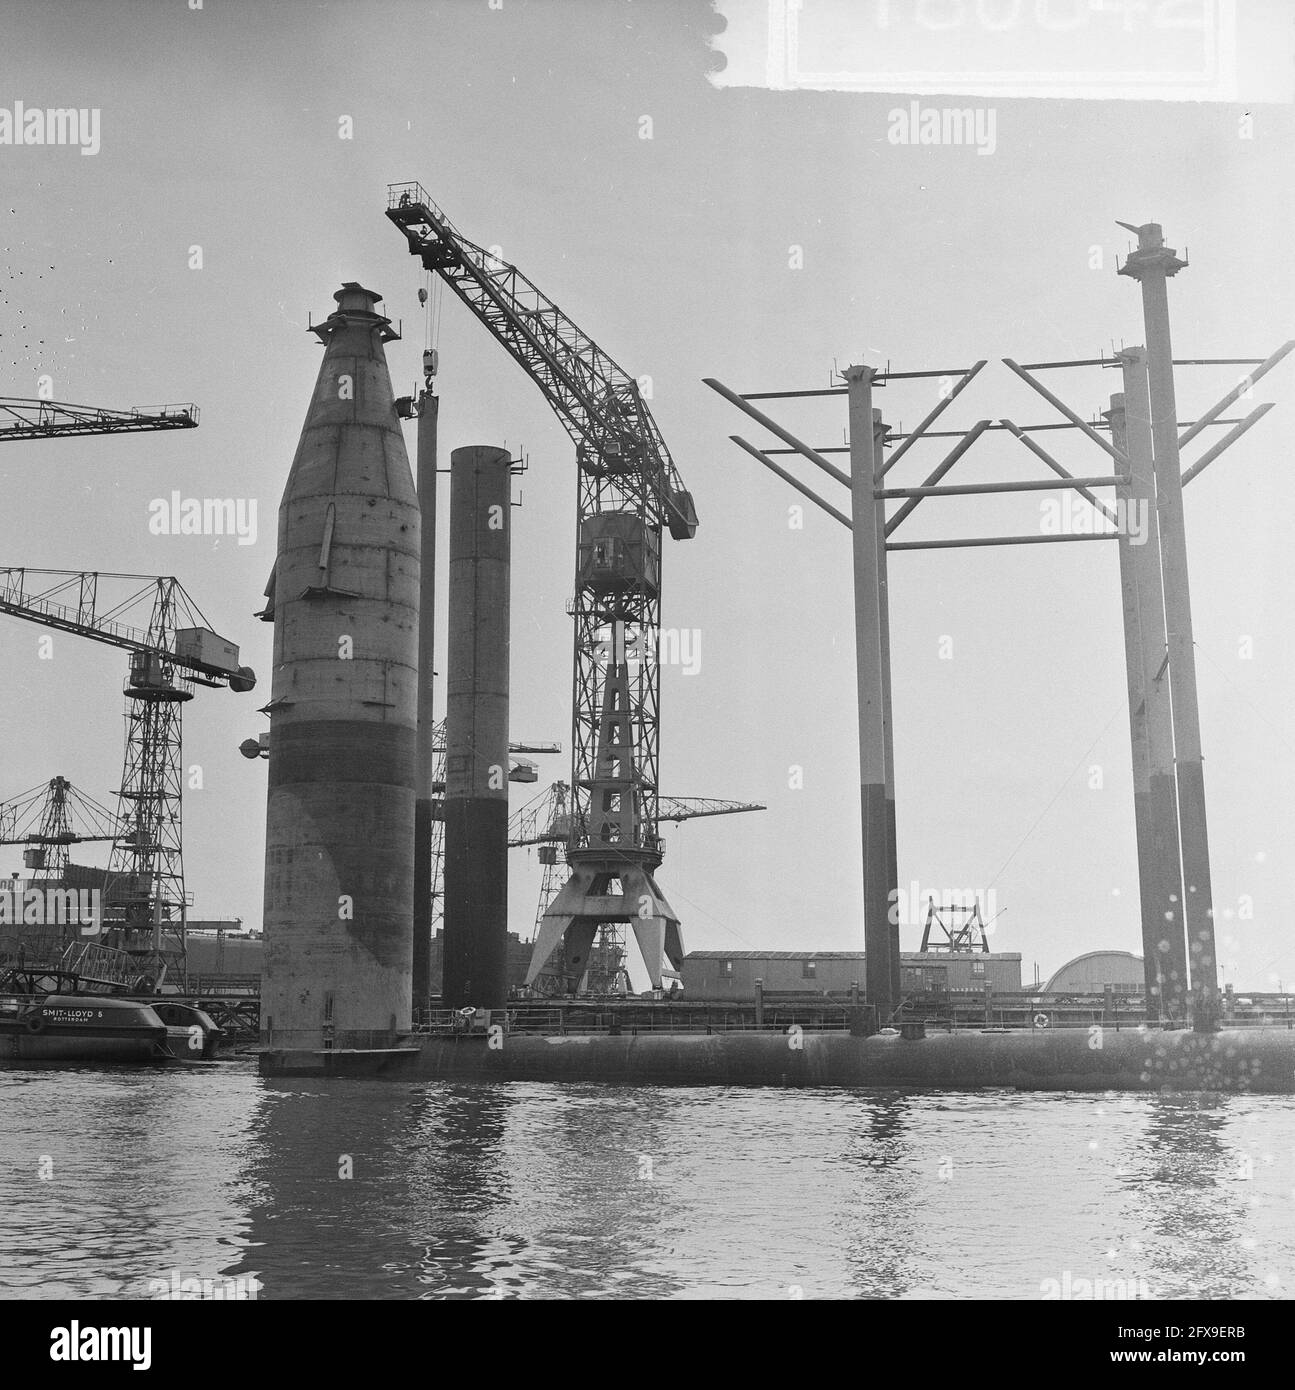 Construction of the American drilling rig Transworld Rig 58. Co-production  of Van der Giessen - de Noord (Krimpen aan den IJssel), P. Smit jr.  (Rotterdam) and Wilton Feijenoord (Schiedam). The drilling rig